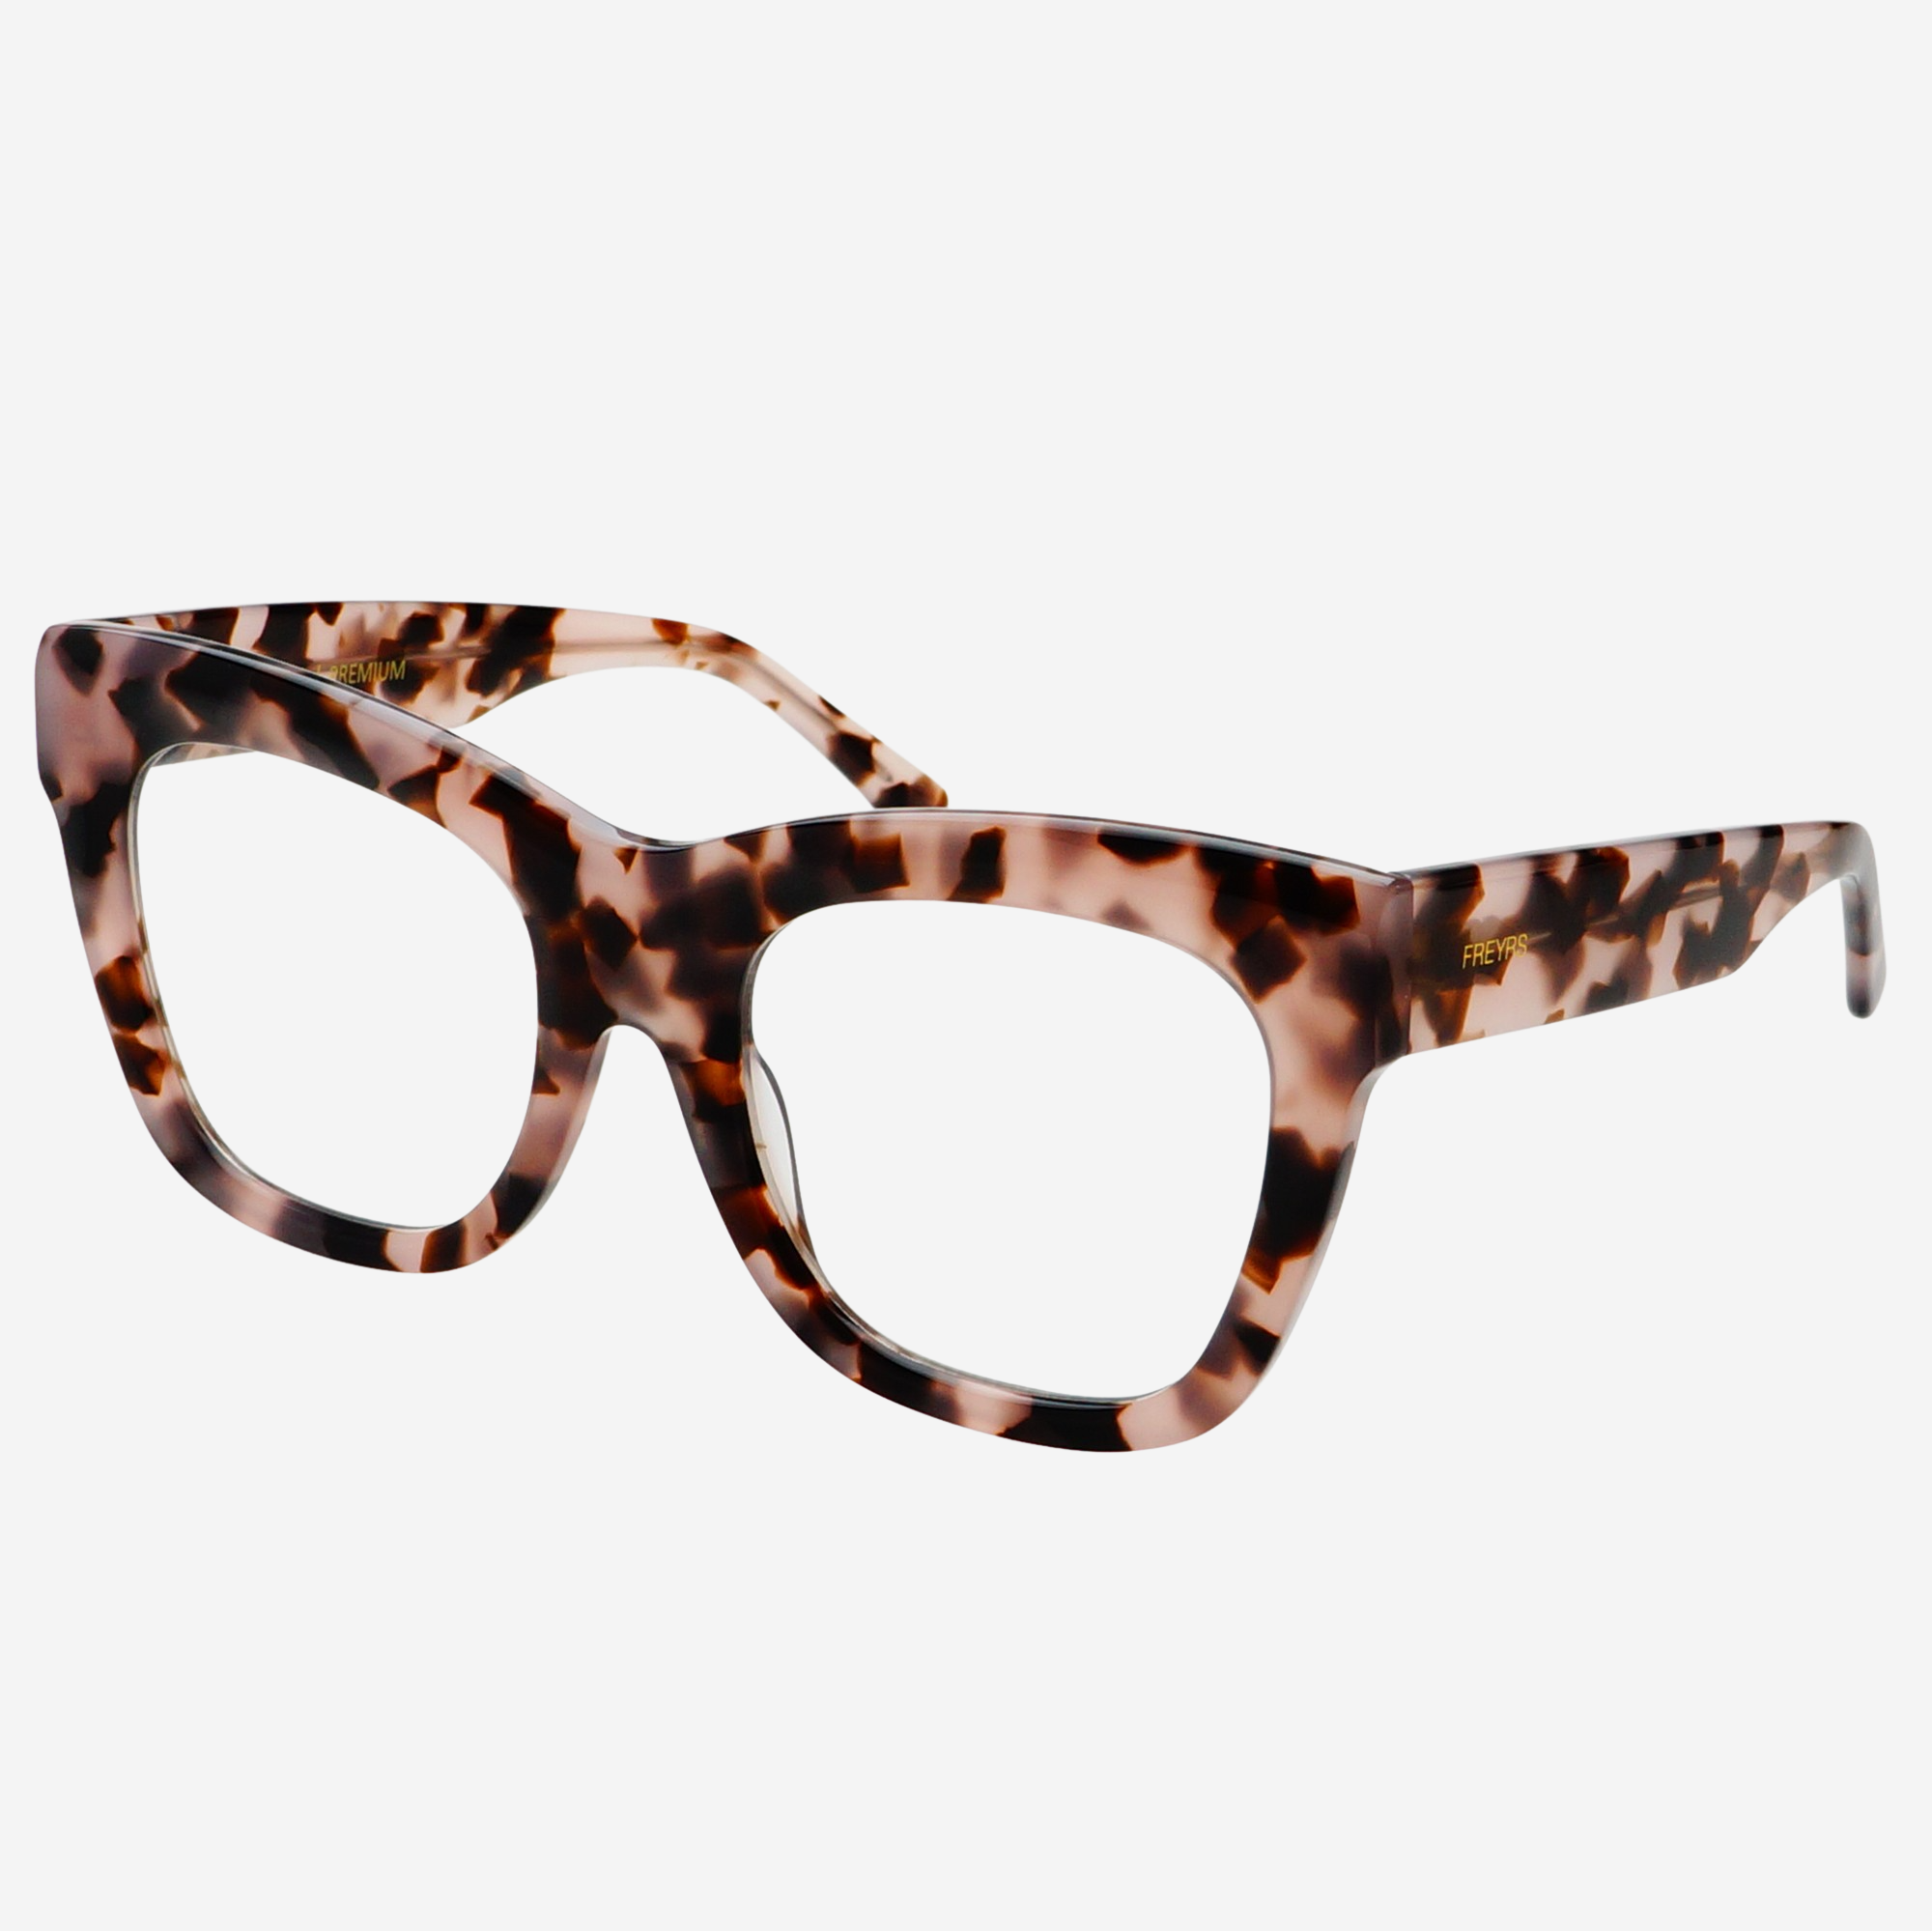 Roxy Womens Large Round Cat FREYRS Sunglasses by Eyewear Eye